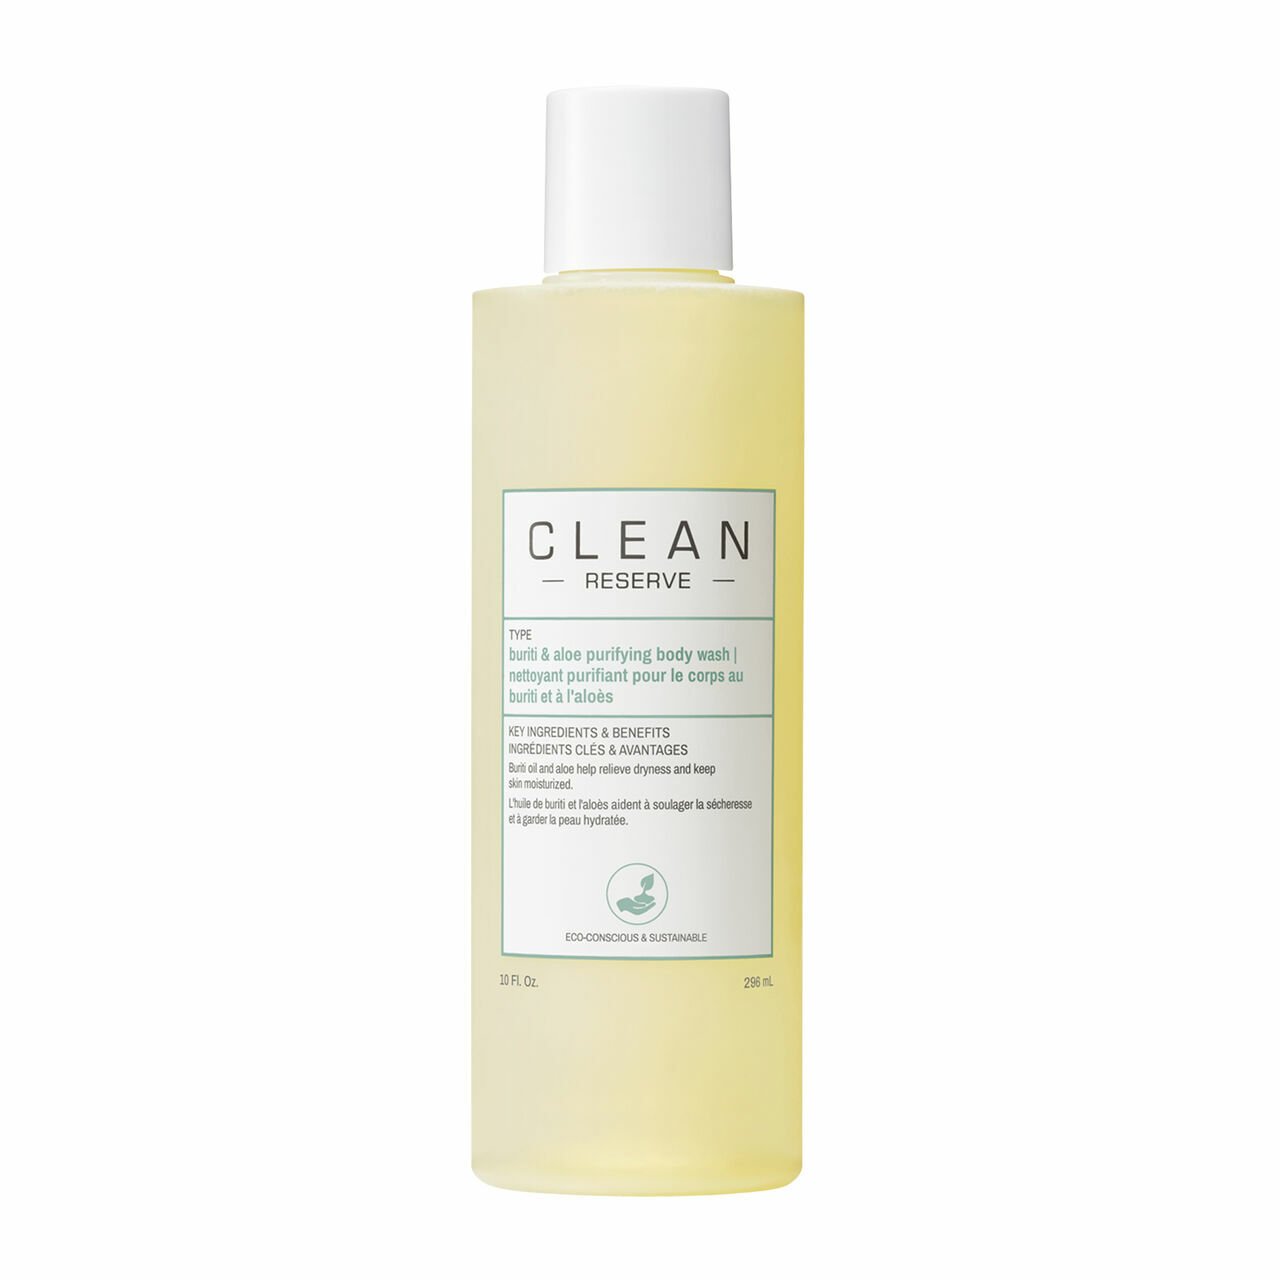 CLEAN Reserve Buriti & Aloe Purifying Body Wash 296 ml